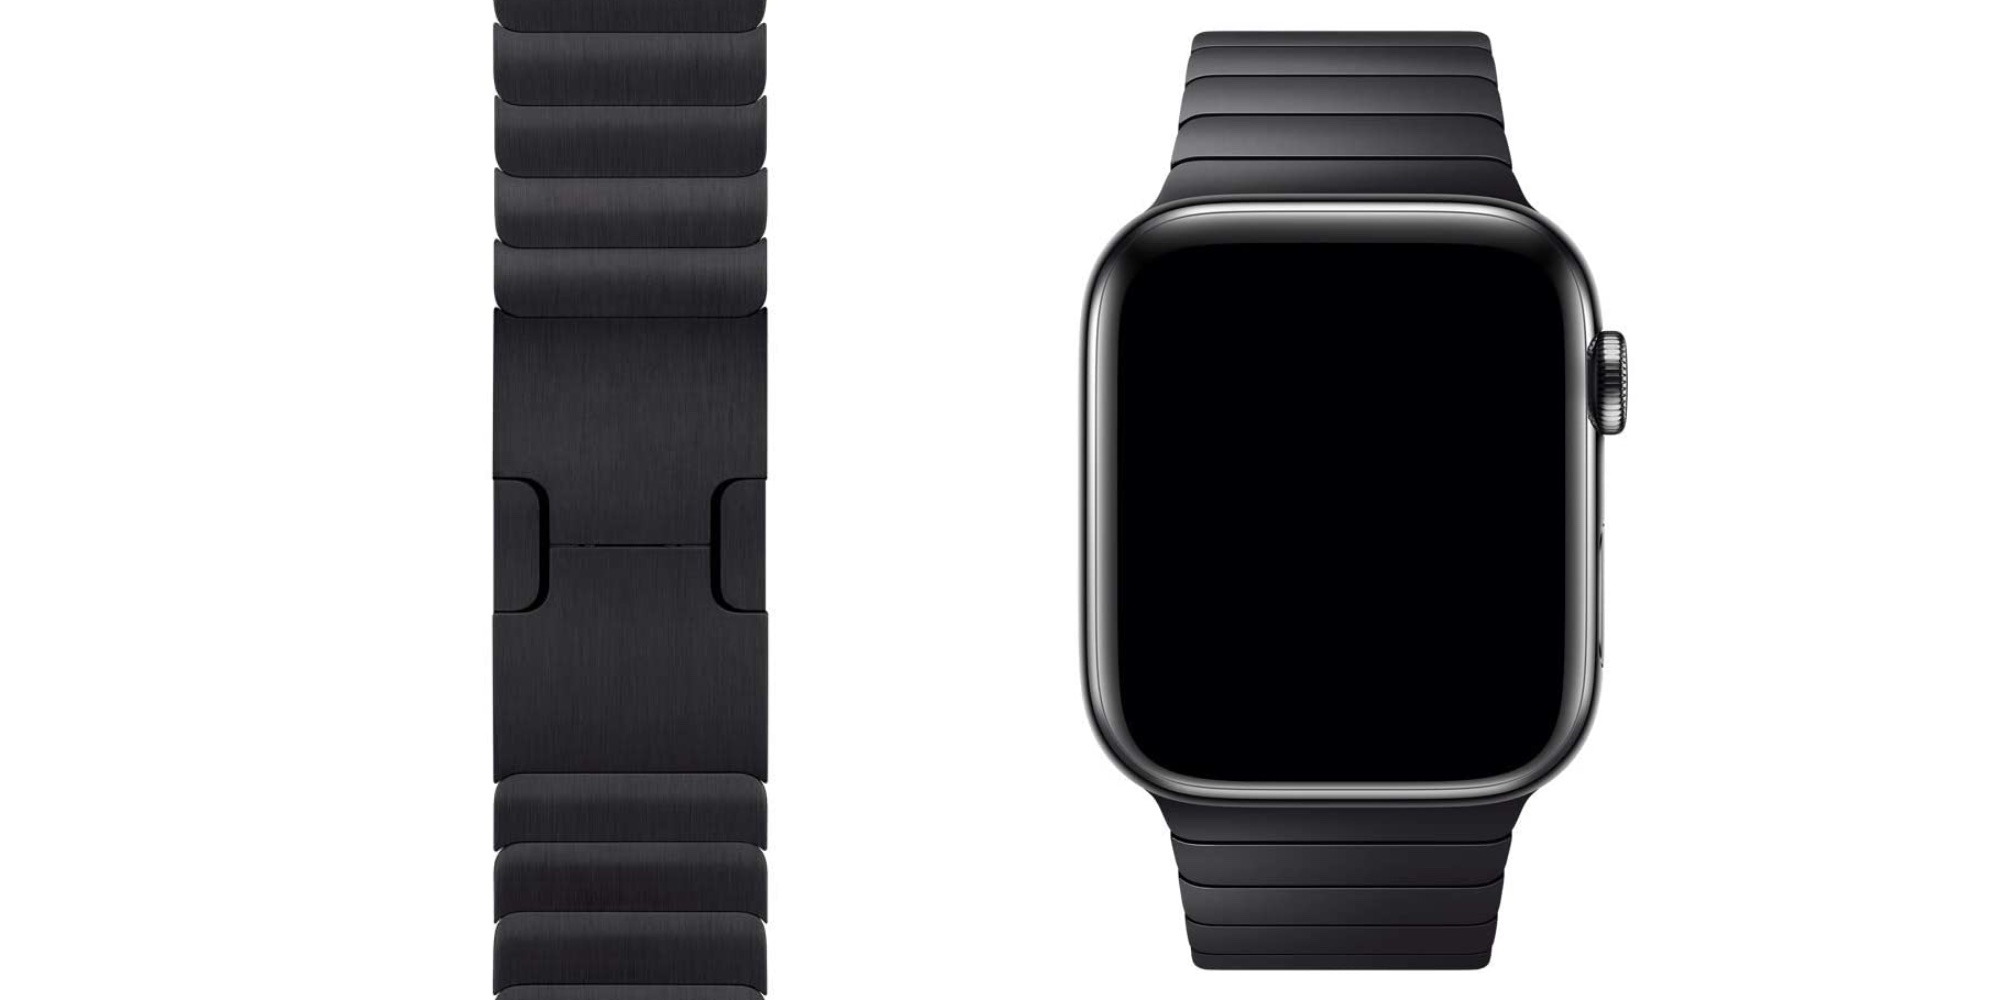 Official Space Black Apple Watch Link Bracelet sees rare $125